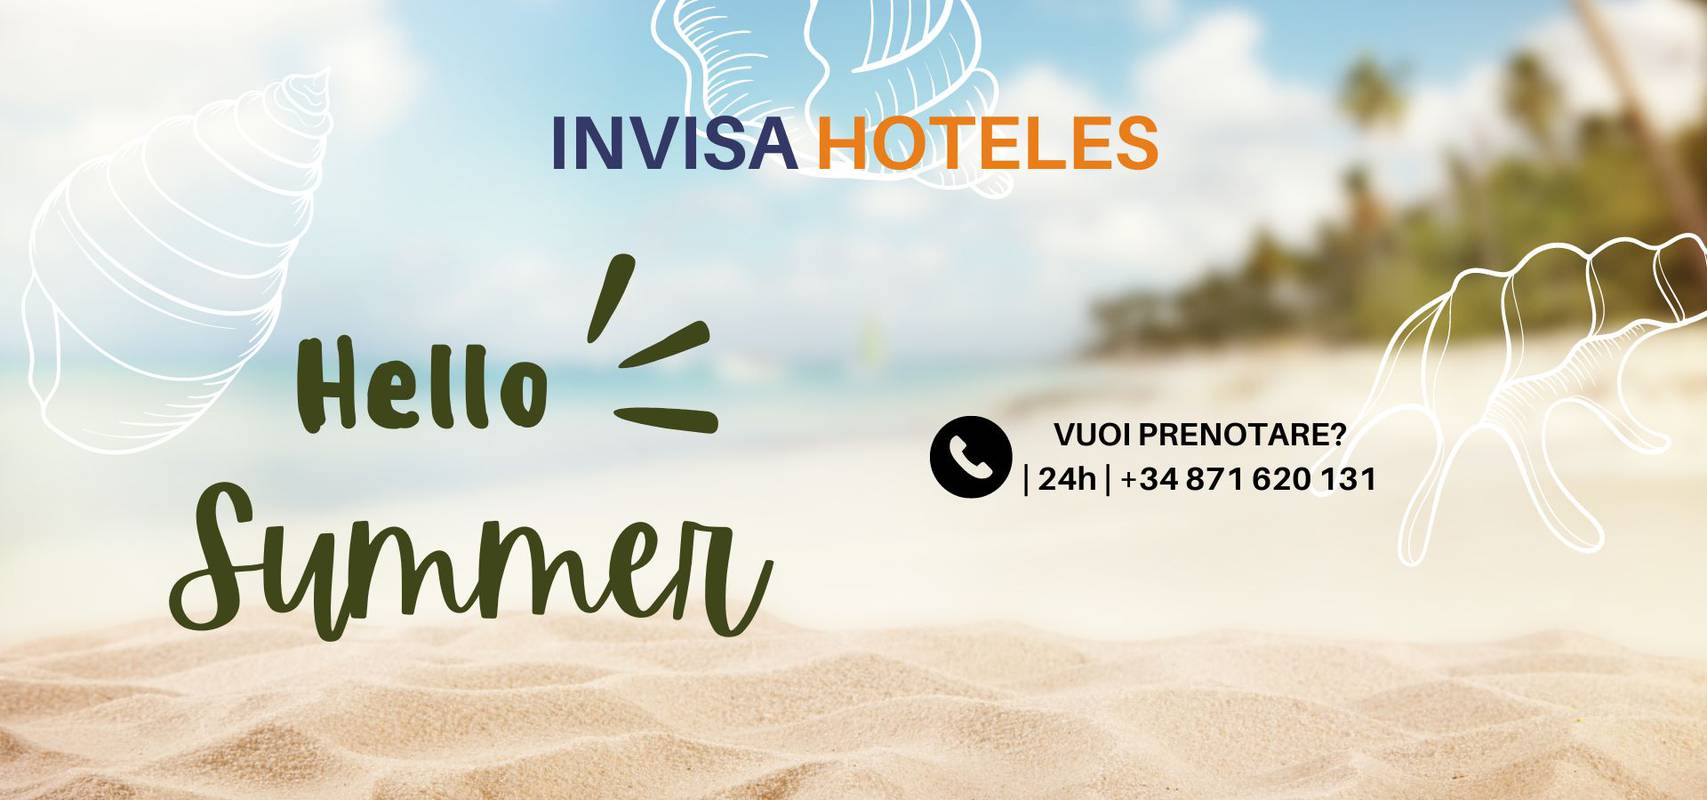  Invisa Hotels